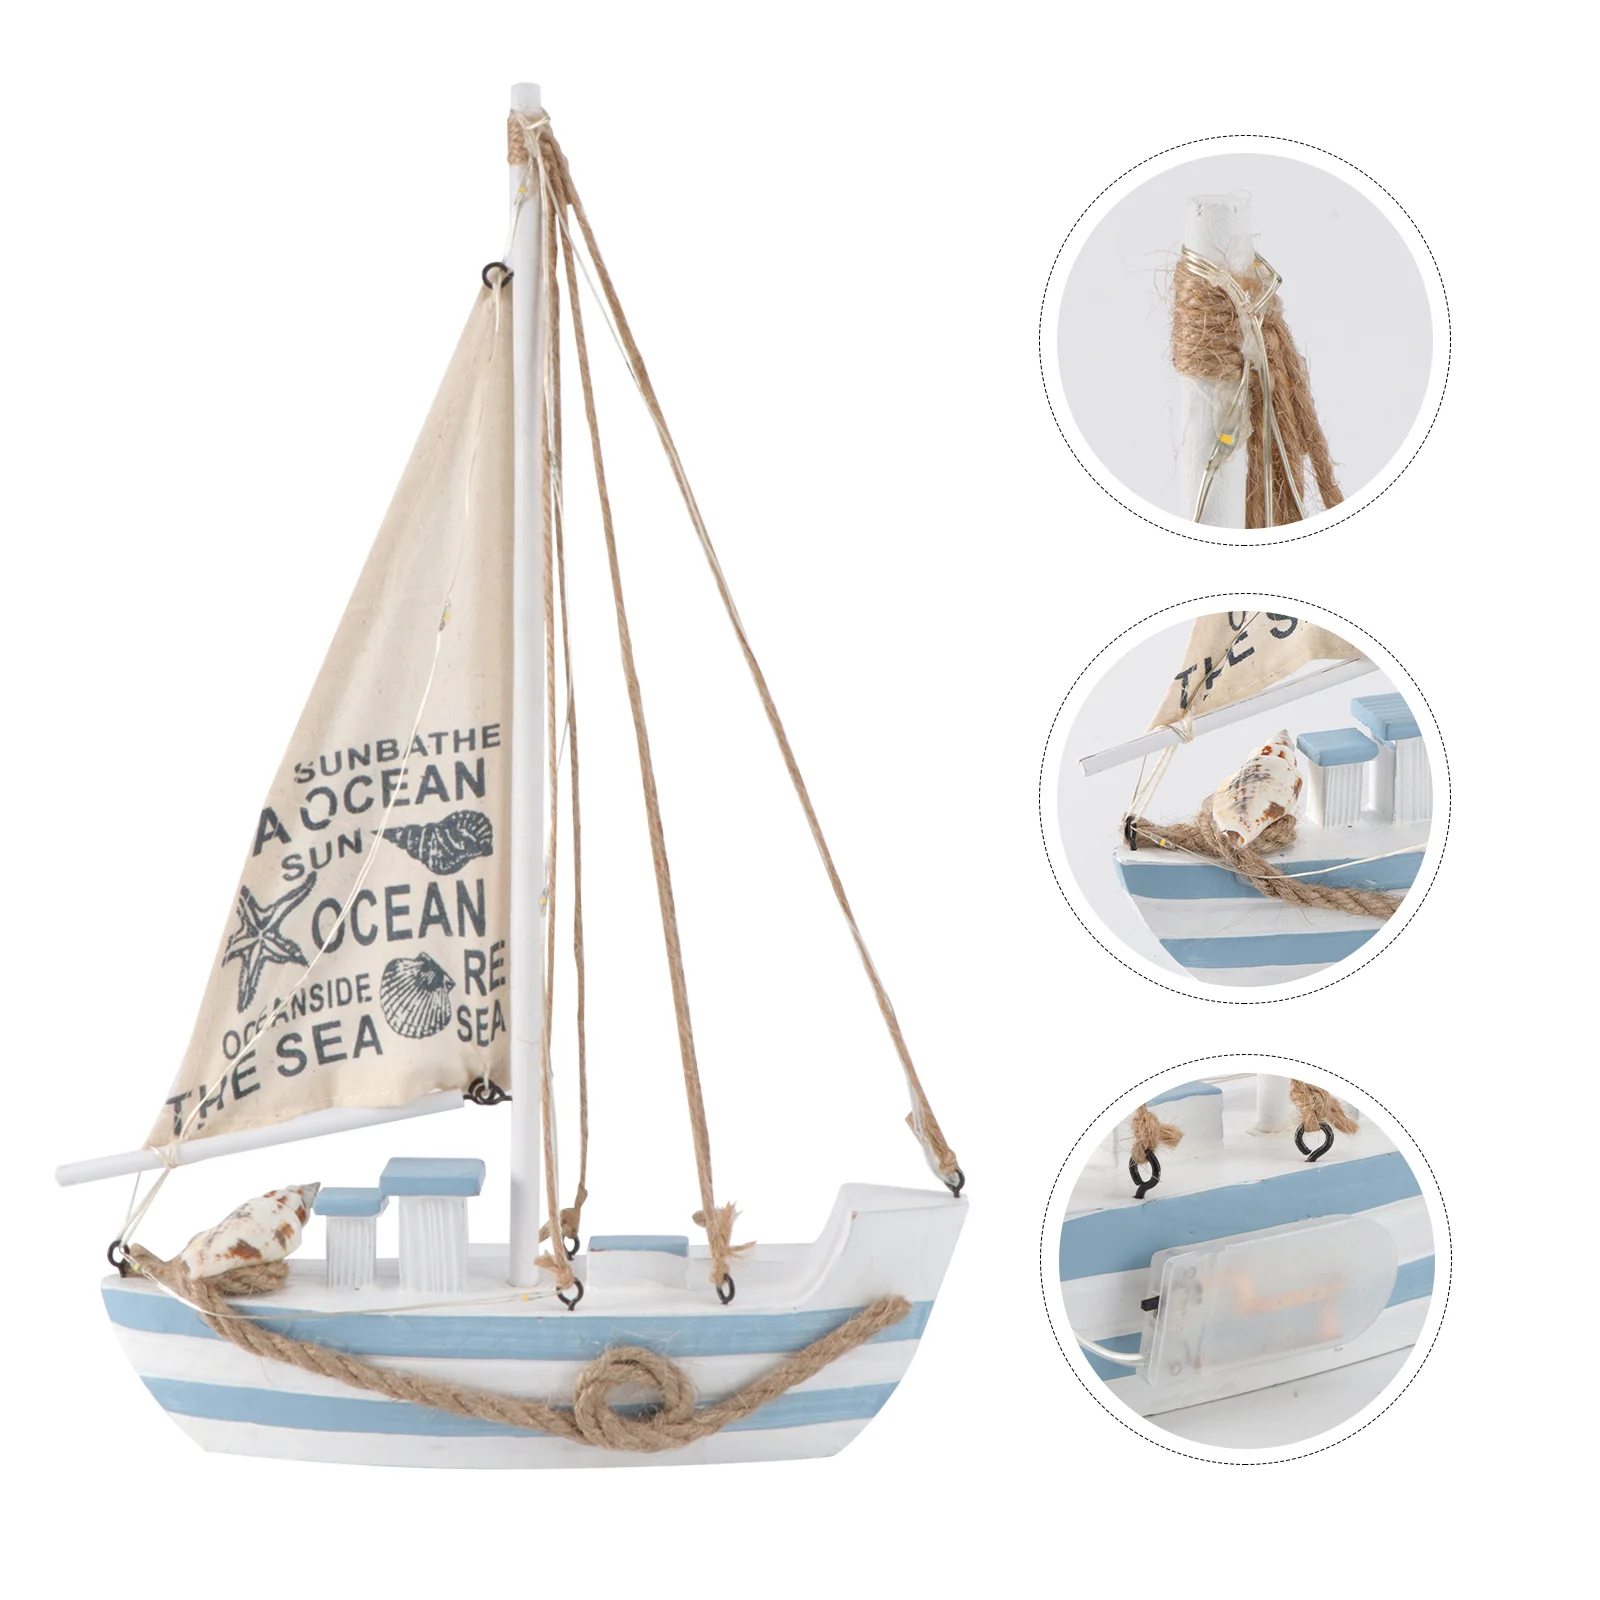 

Decor Sailor Gift Nautical Sailboat Decor Wooden Sailing Ship Model Wood Sailing Ship Model Wooden Sailboat Decor